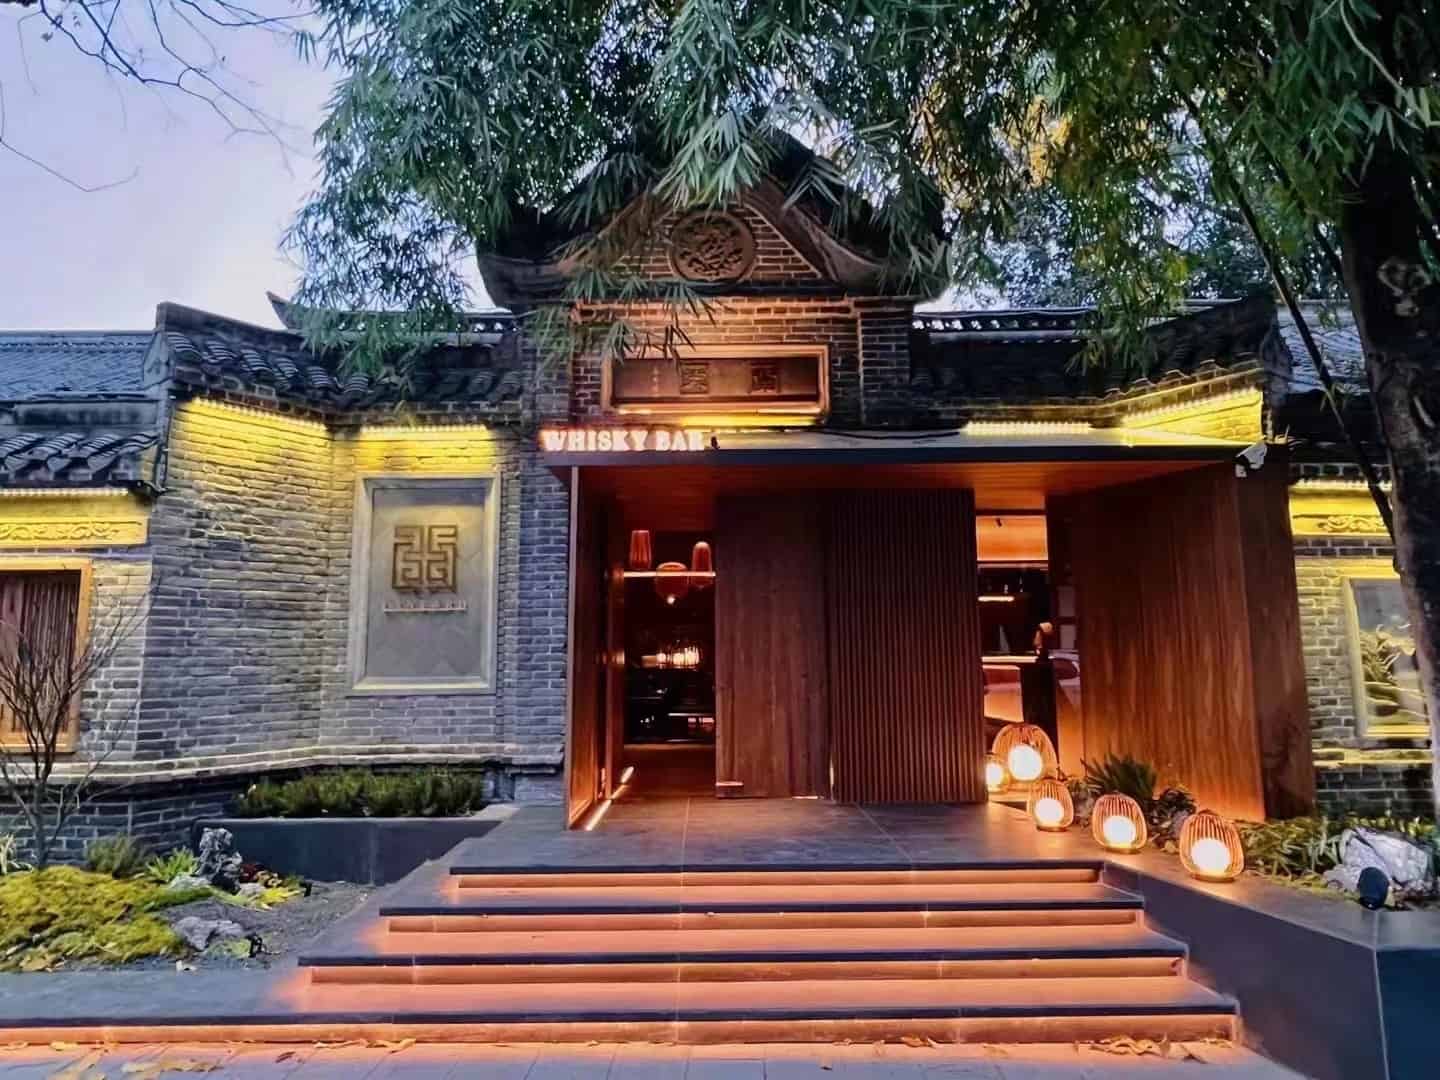 Lanyard Whisky Bar chengdu chengdu expat